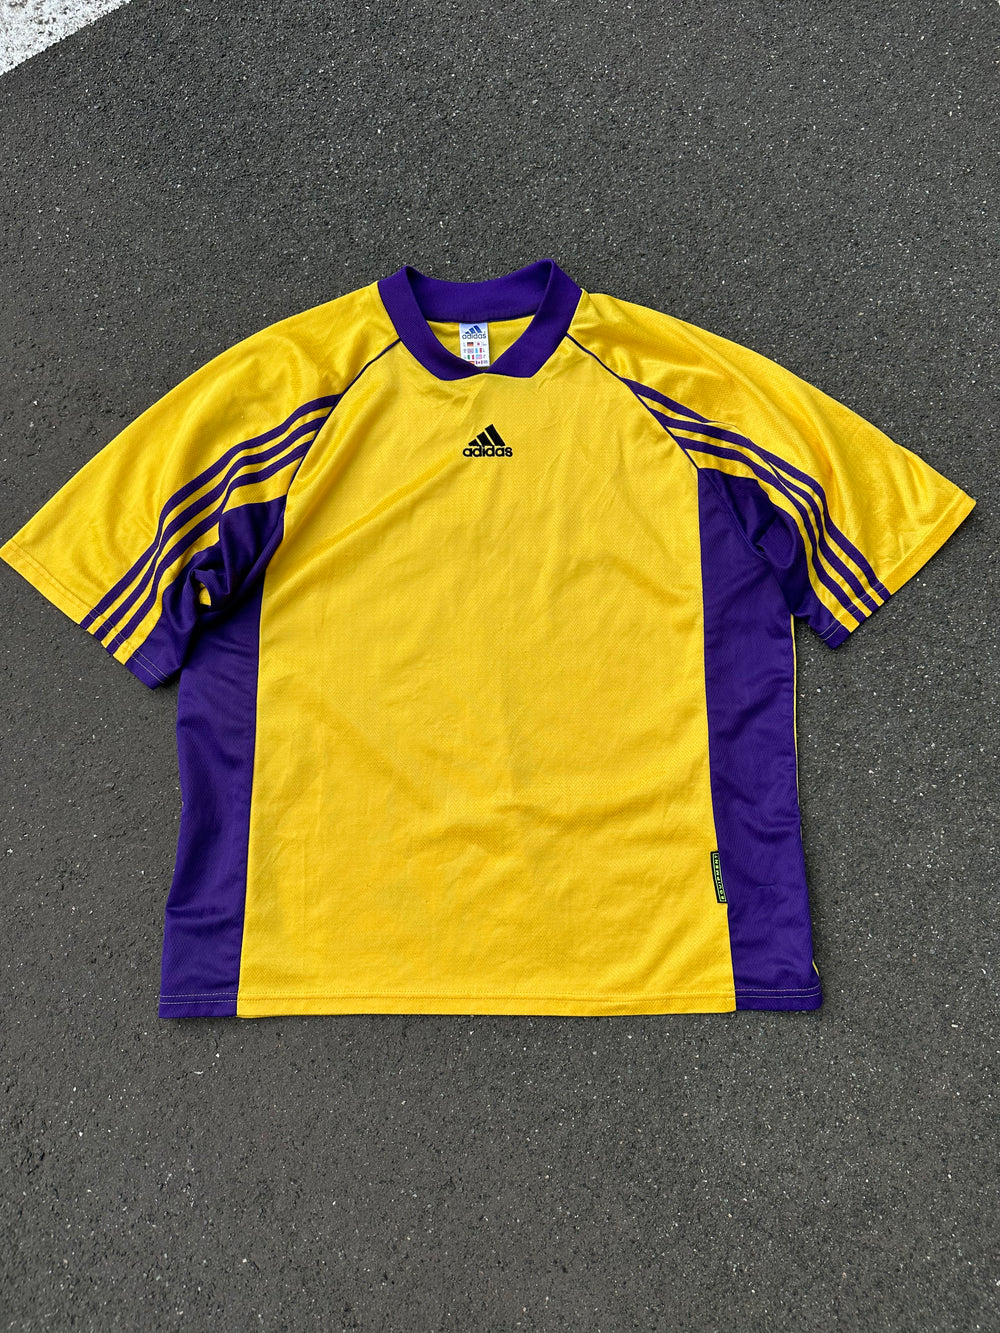 90s Adidas Equipment Ksk T-Shirt (XL)